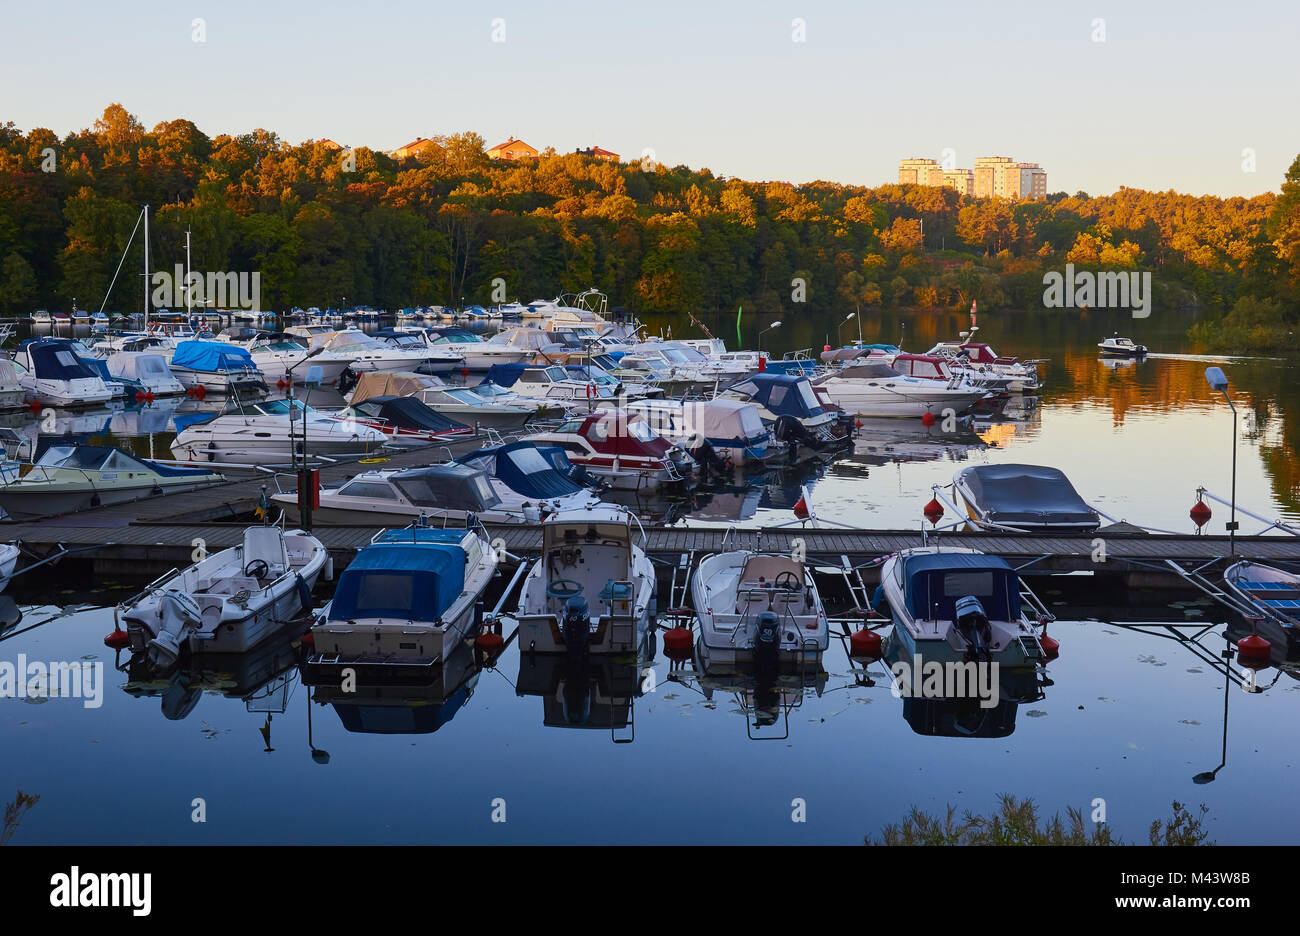 Boats moored, Hammarby Sjostad, Hammarby Lake, Stockholm, Sweden, Scandinavia. Stock Photo